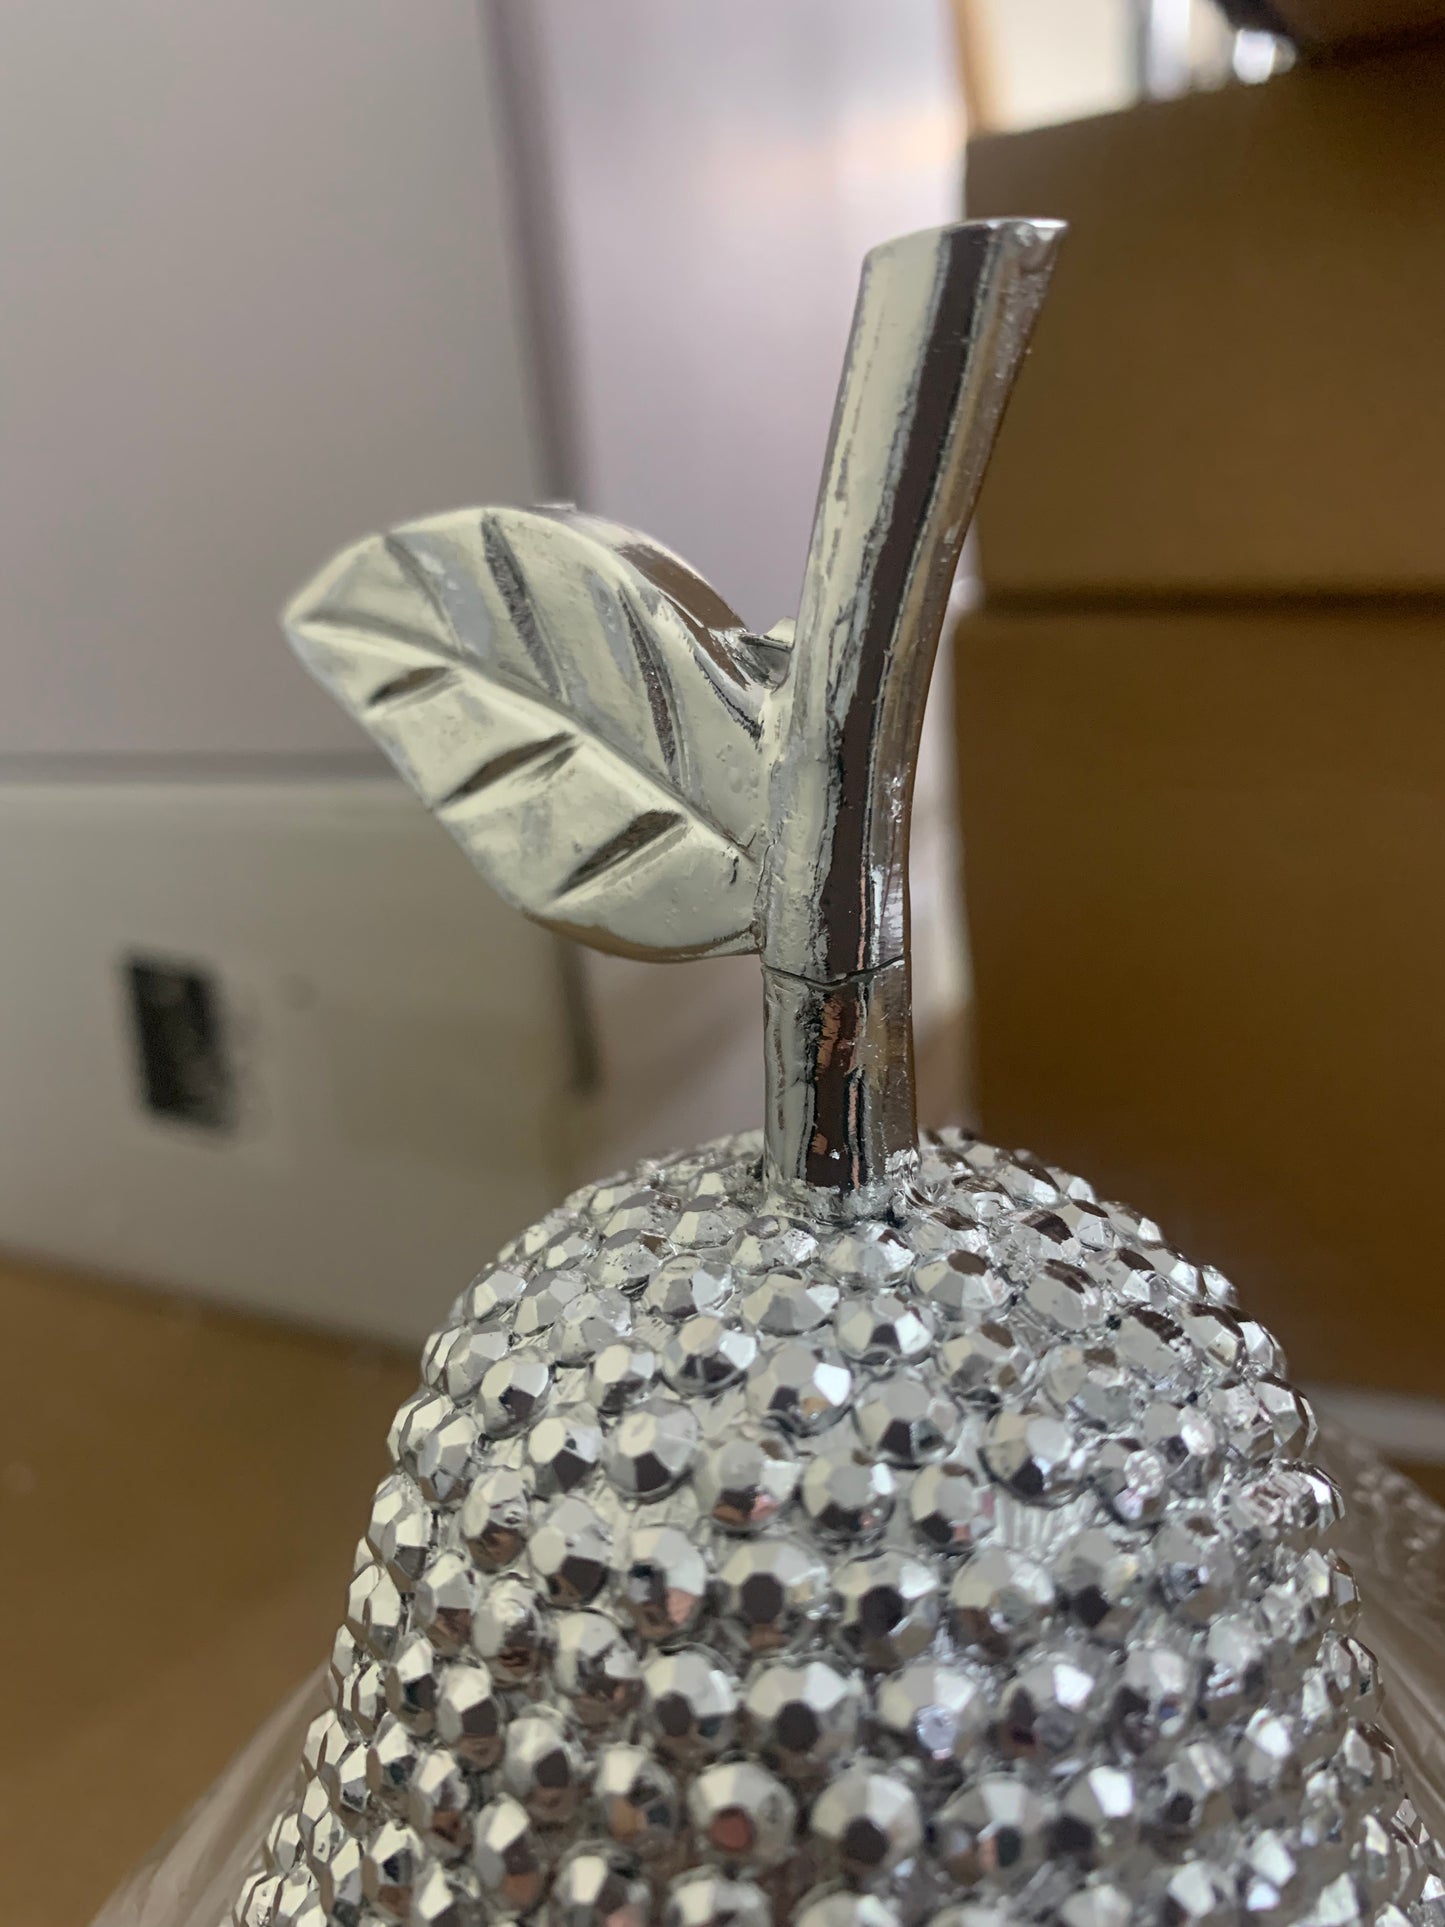 Flawed Diamante Pear Ornament